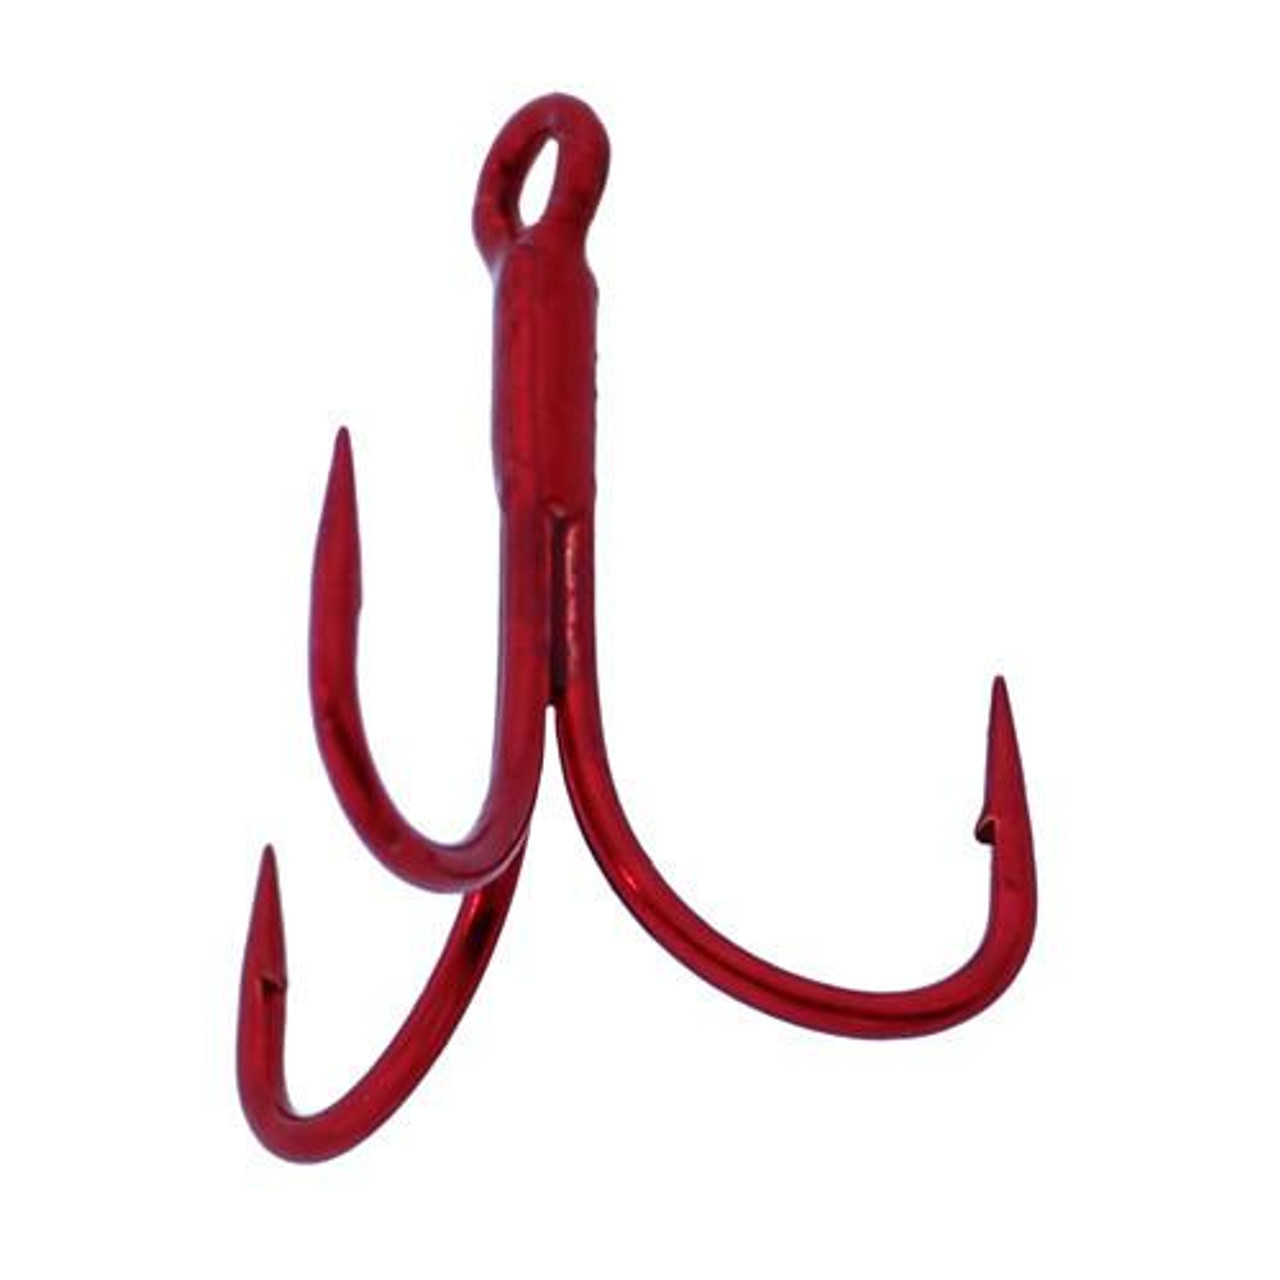 Gamakatsu Trout Treble Hook Size 16, Red, Per 4, 273302